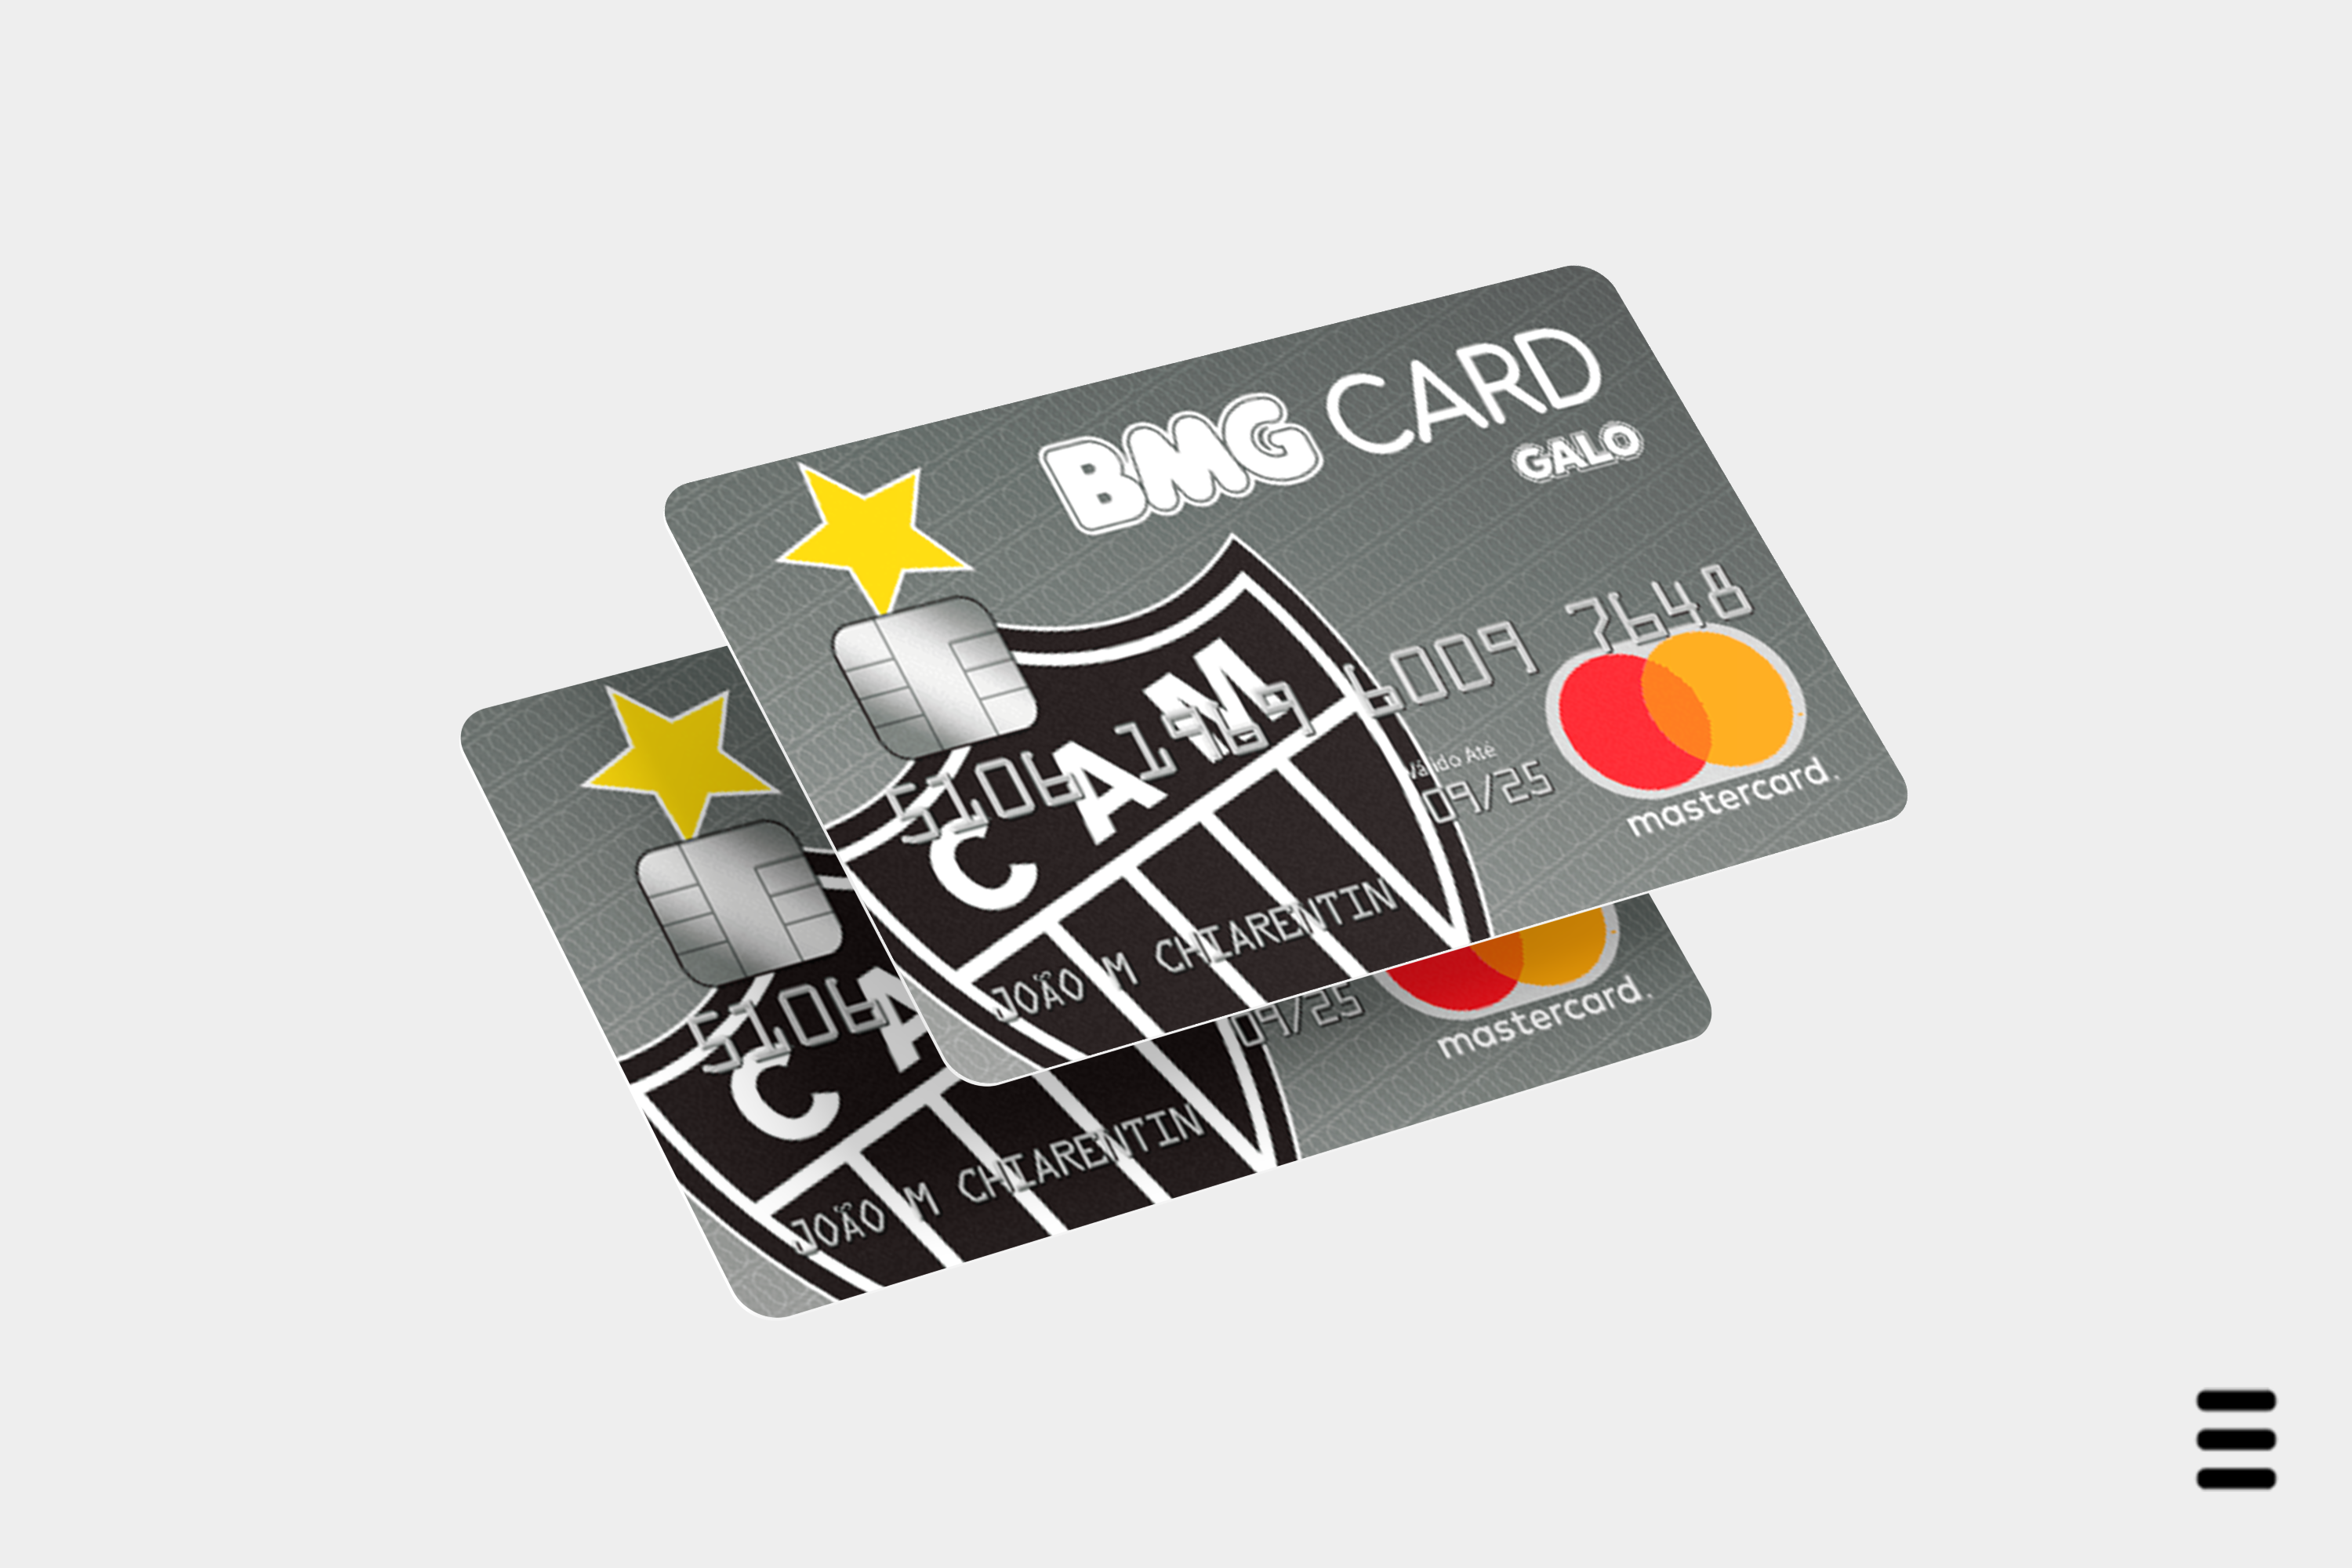 Cartão De Crédito Bmg Card Galo Consignado Mastercard Br 5737